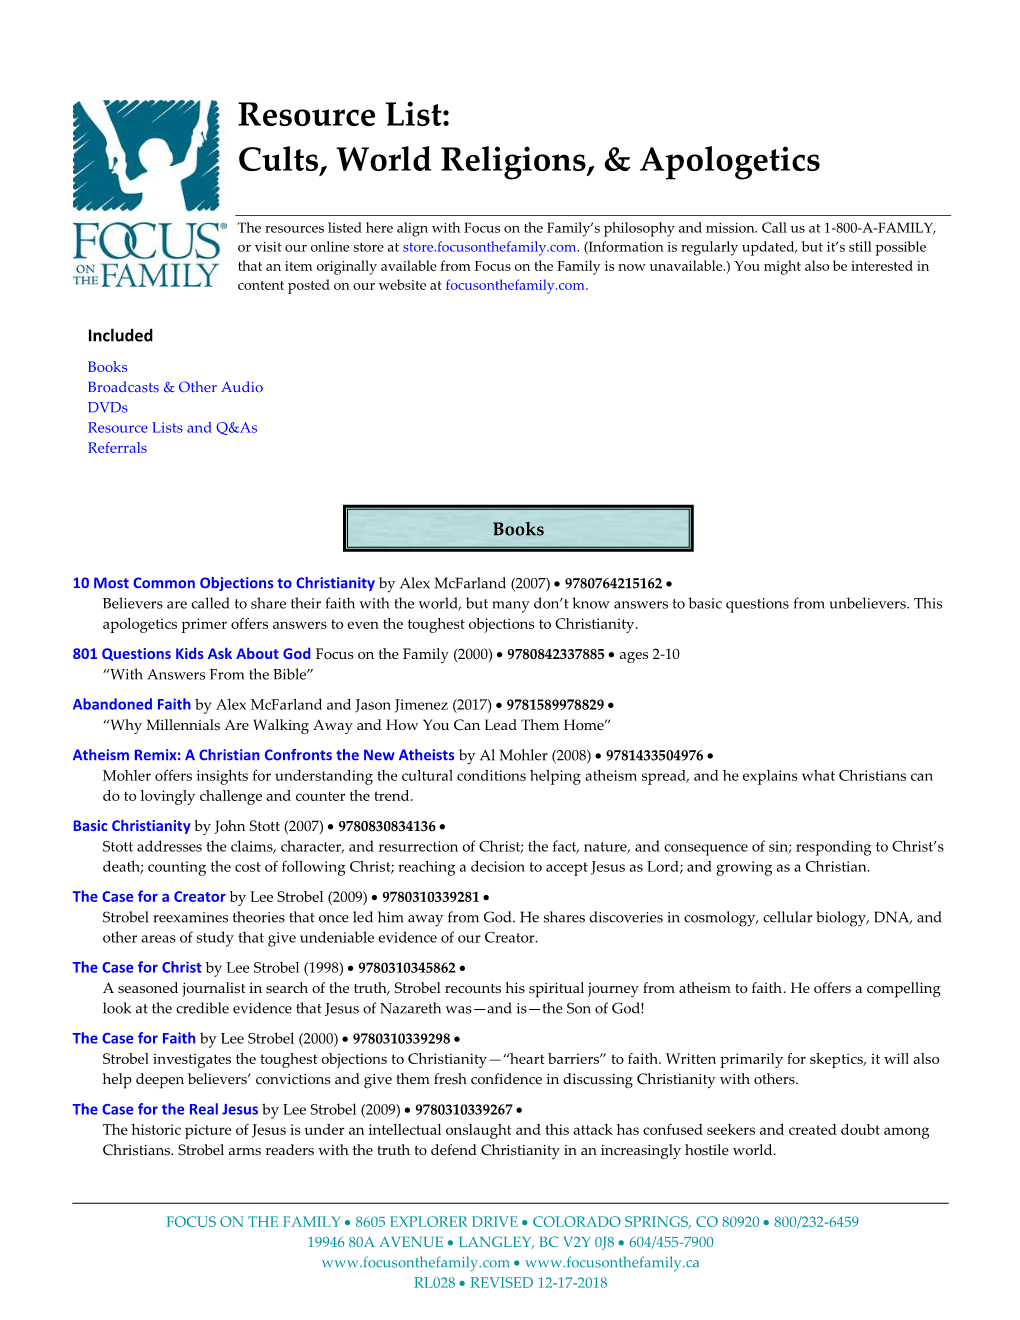 Cults, World Religions, & Apologetics